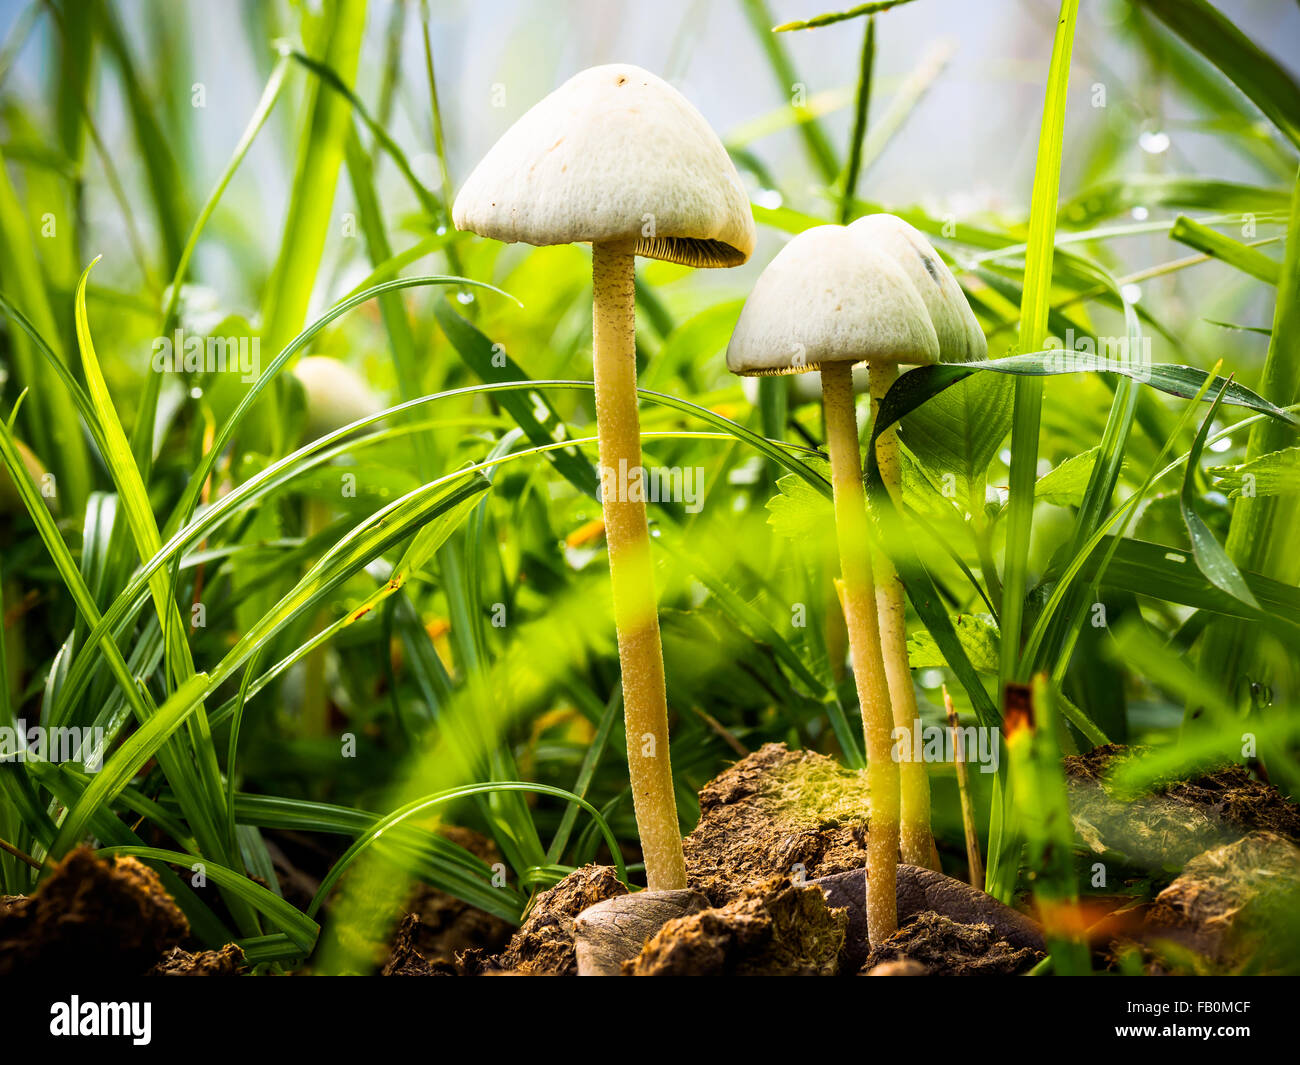 Natural tiny mushroom growing on the ground Stock Photo